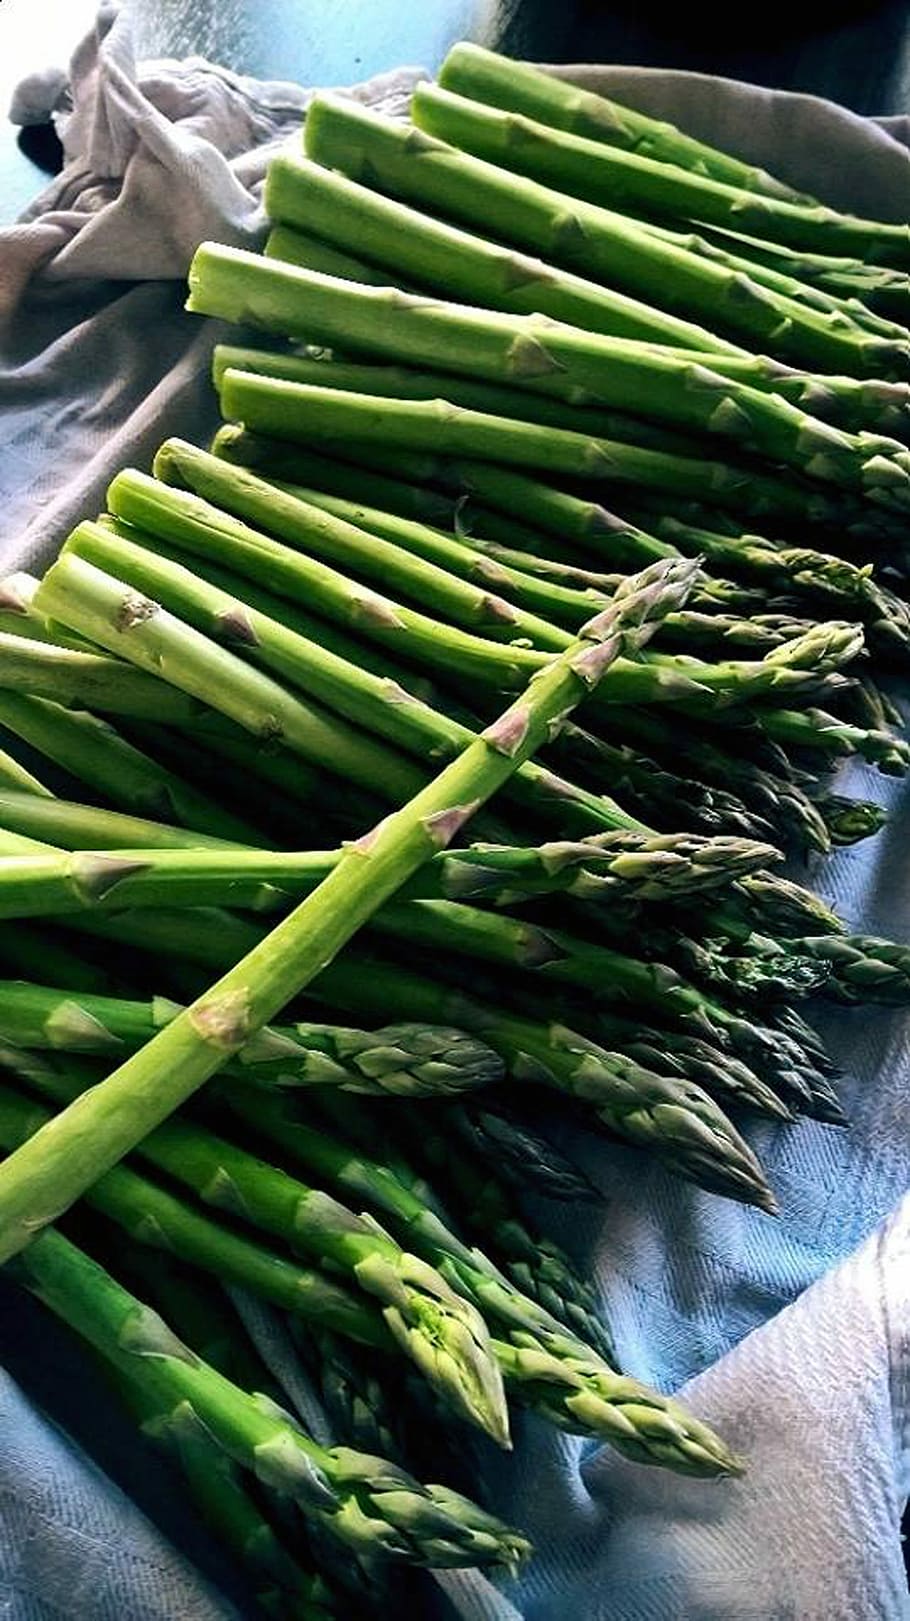 Asparagus, Kitchen, Cook, Eat, vegetables, healthy, food, nutrition, asparagus time, meal